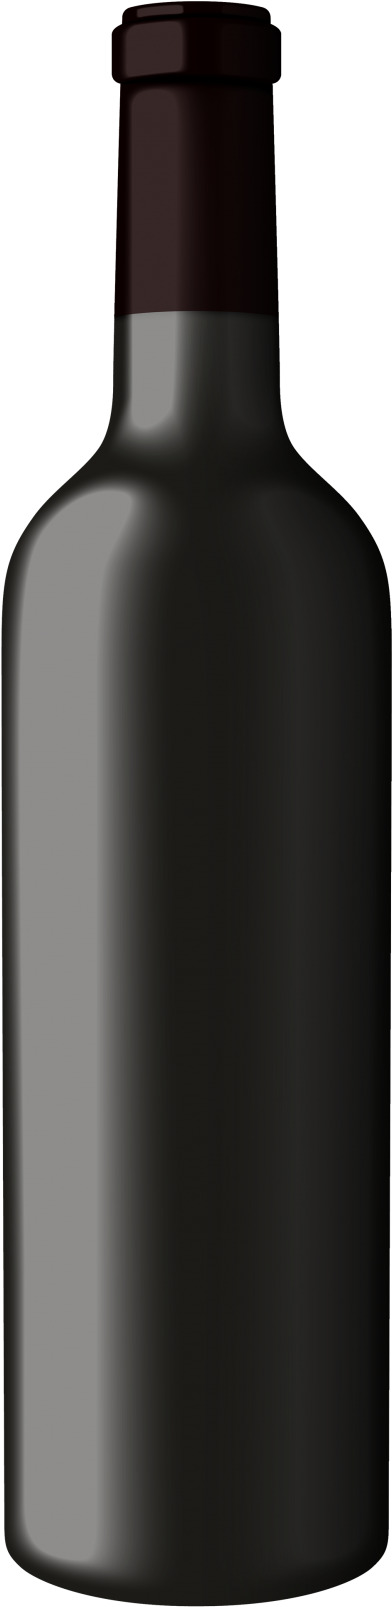 Enter Online Store - Empty Wine Bottle Black (500x1660)